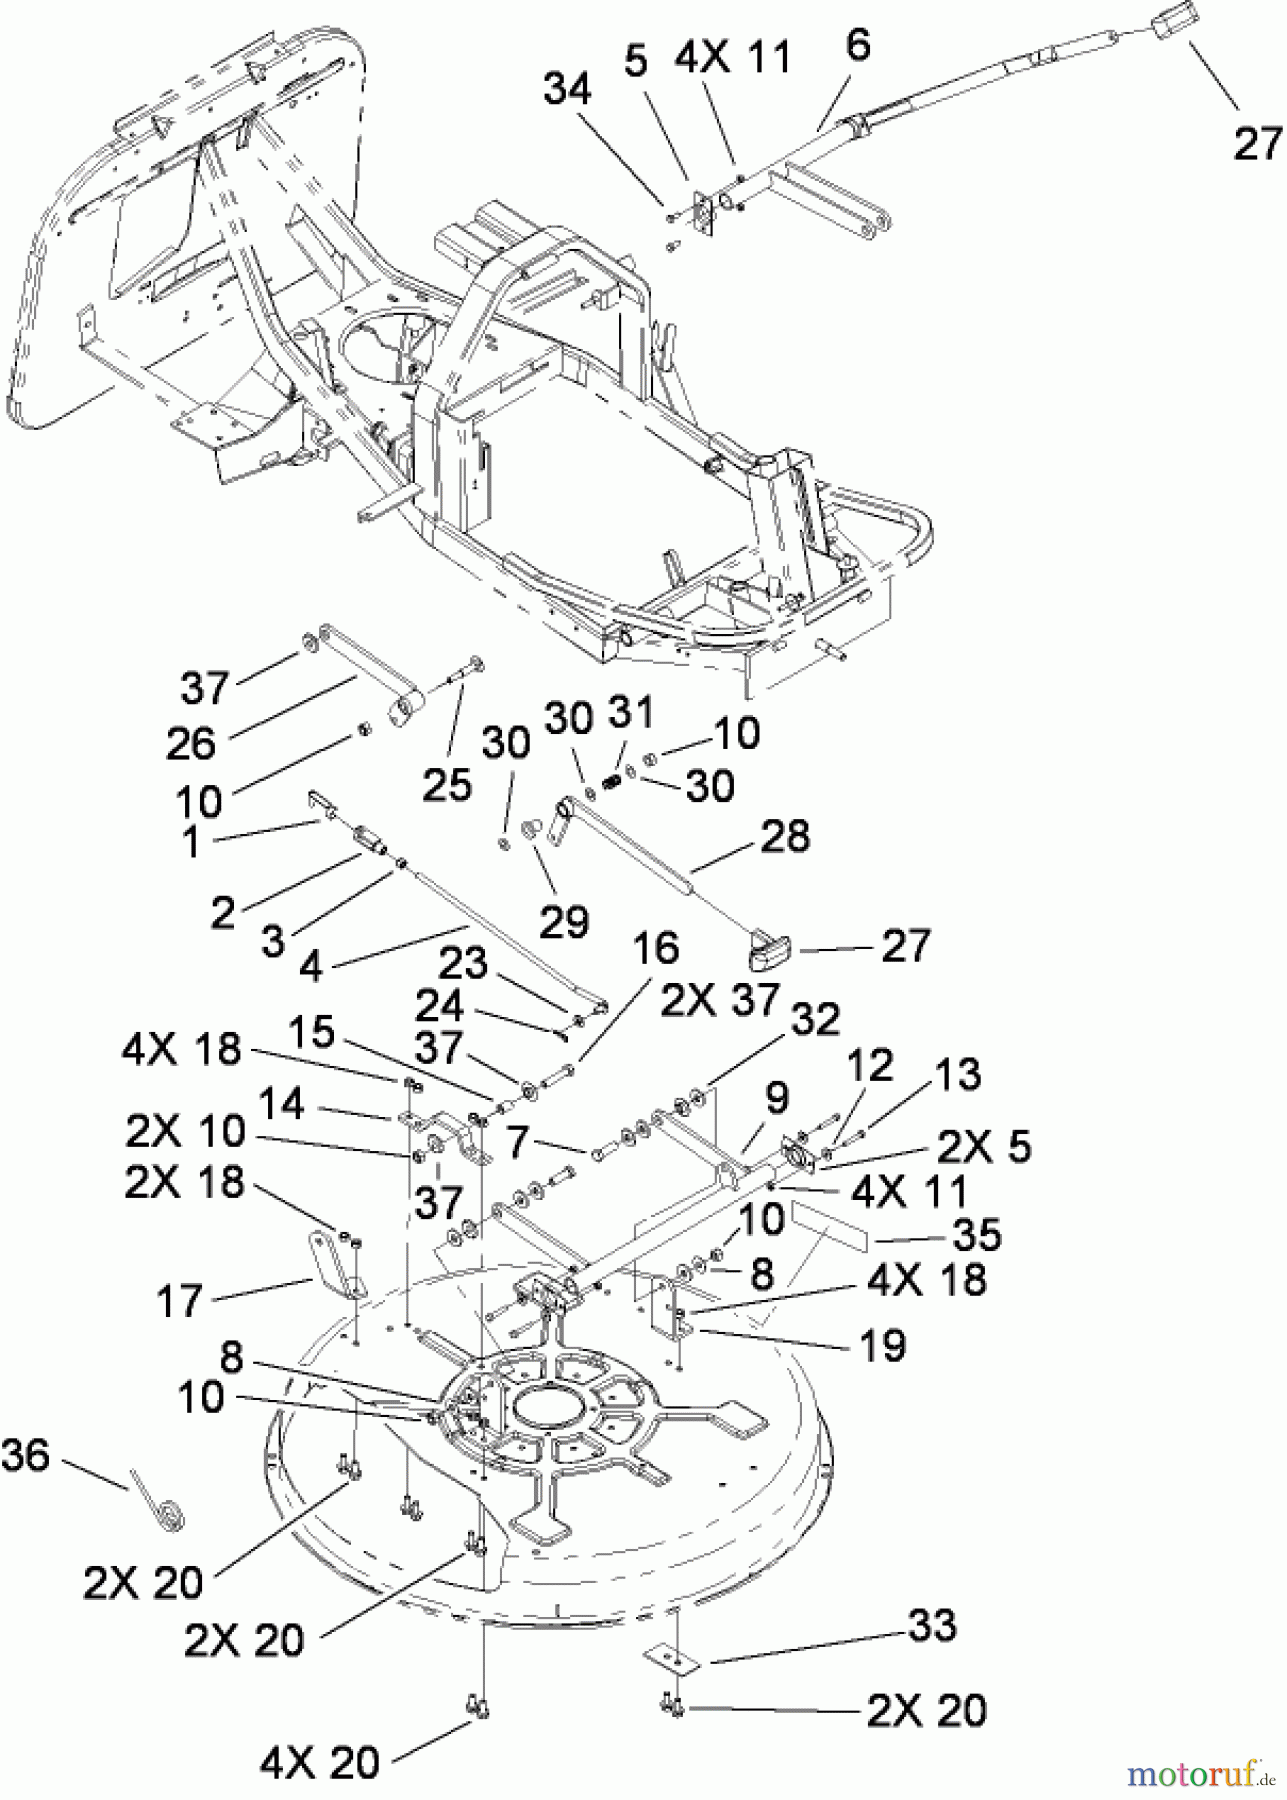  Toro Neu Mowers, Rear-Engine Rider 70186 (H132) - Toro H132 Rear-Engine Riding Mower, 2009 (280899435-290999999) DECK SUSPENSION ASSEMBLY